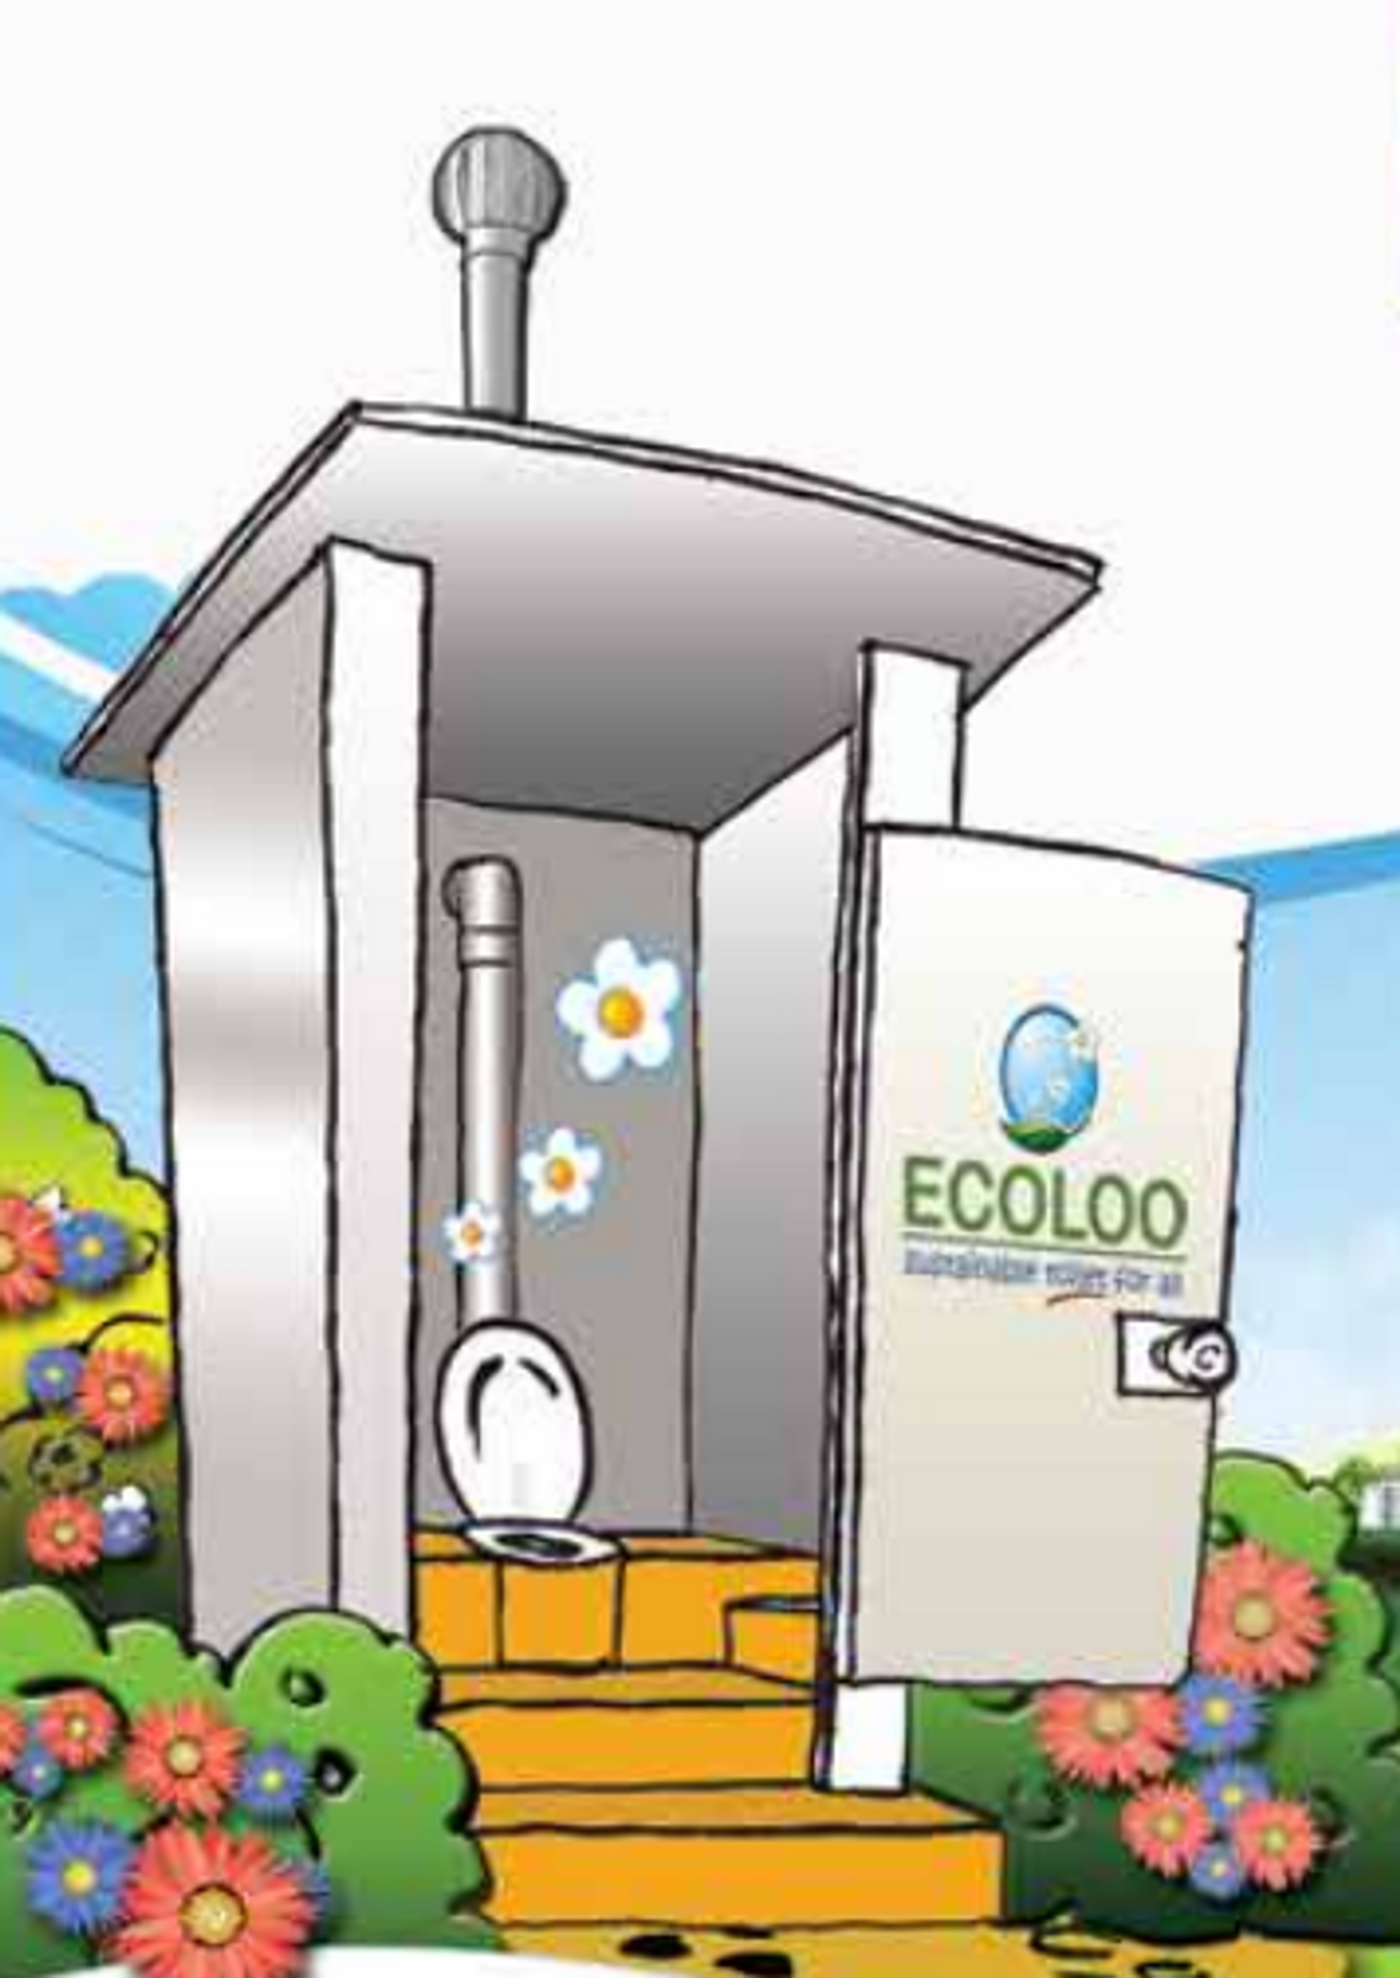 ECOLOO illustration, credit: Ecoloo